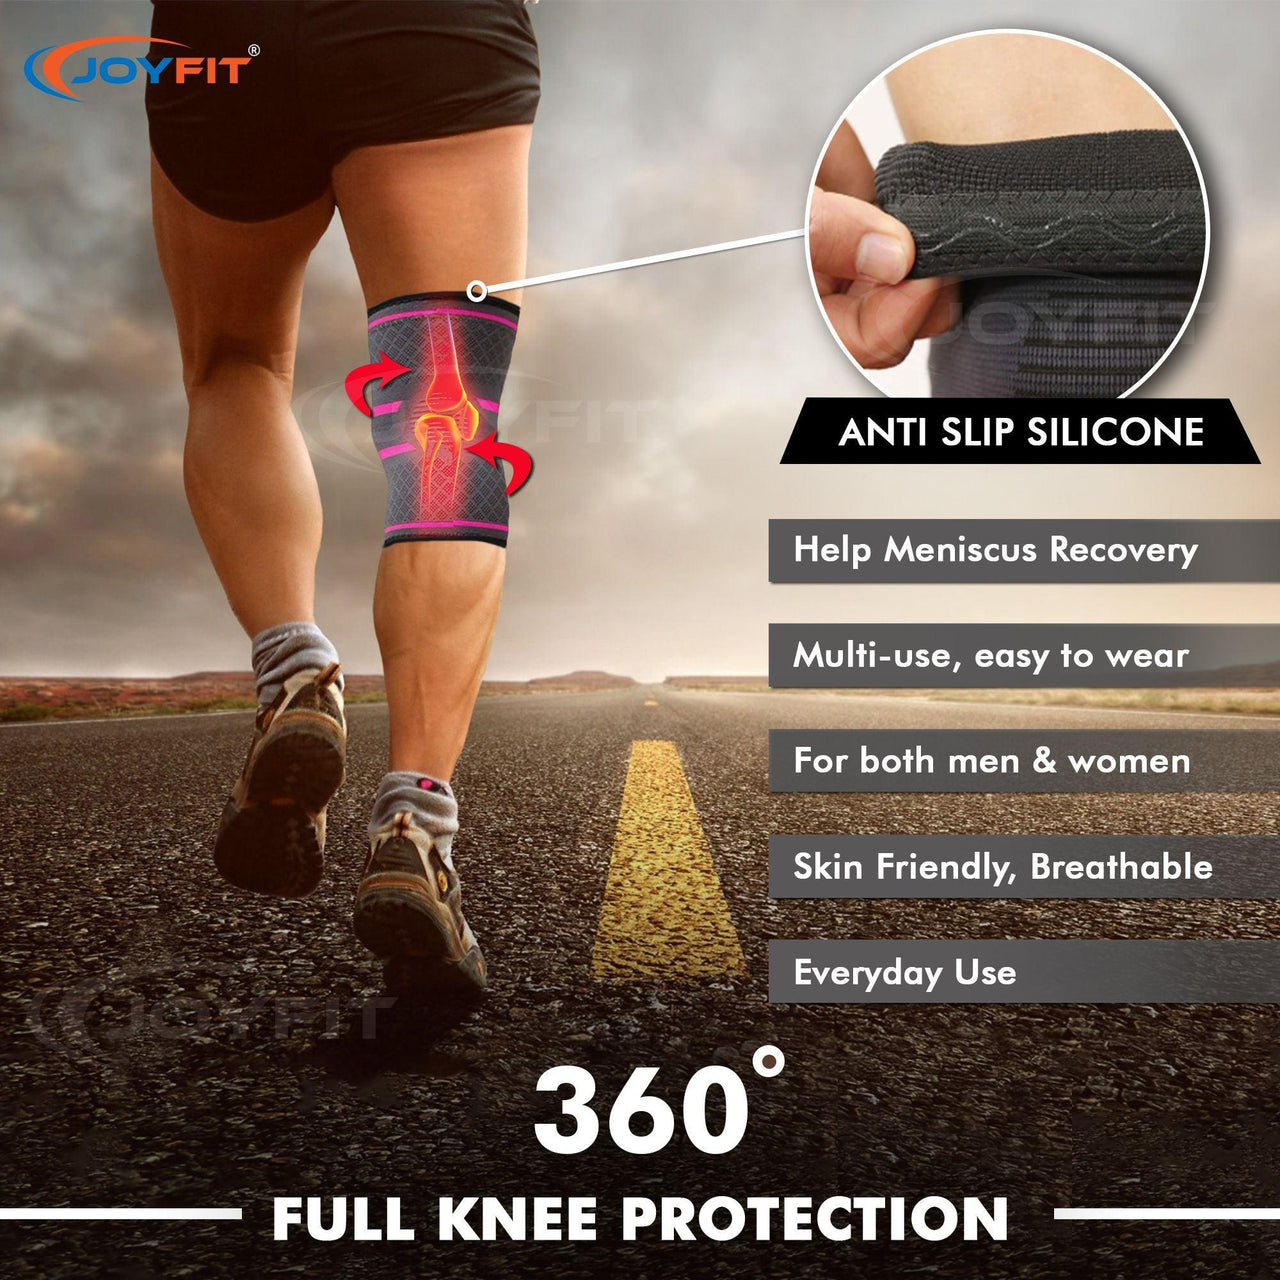 Joyfit Knee Compression Sleeve -Anti-slip Design